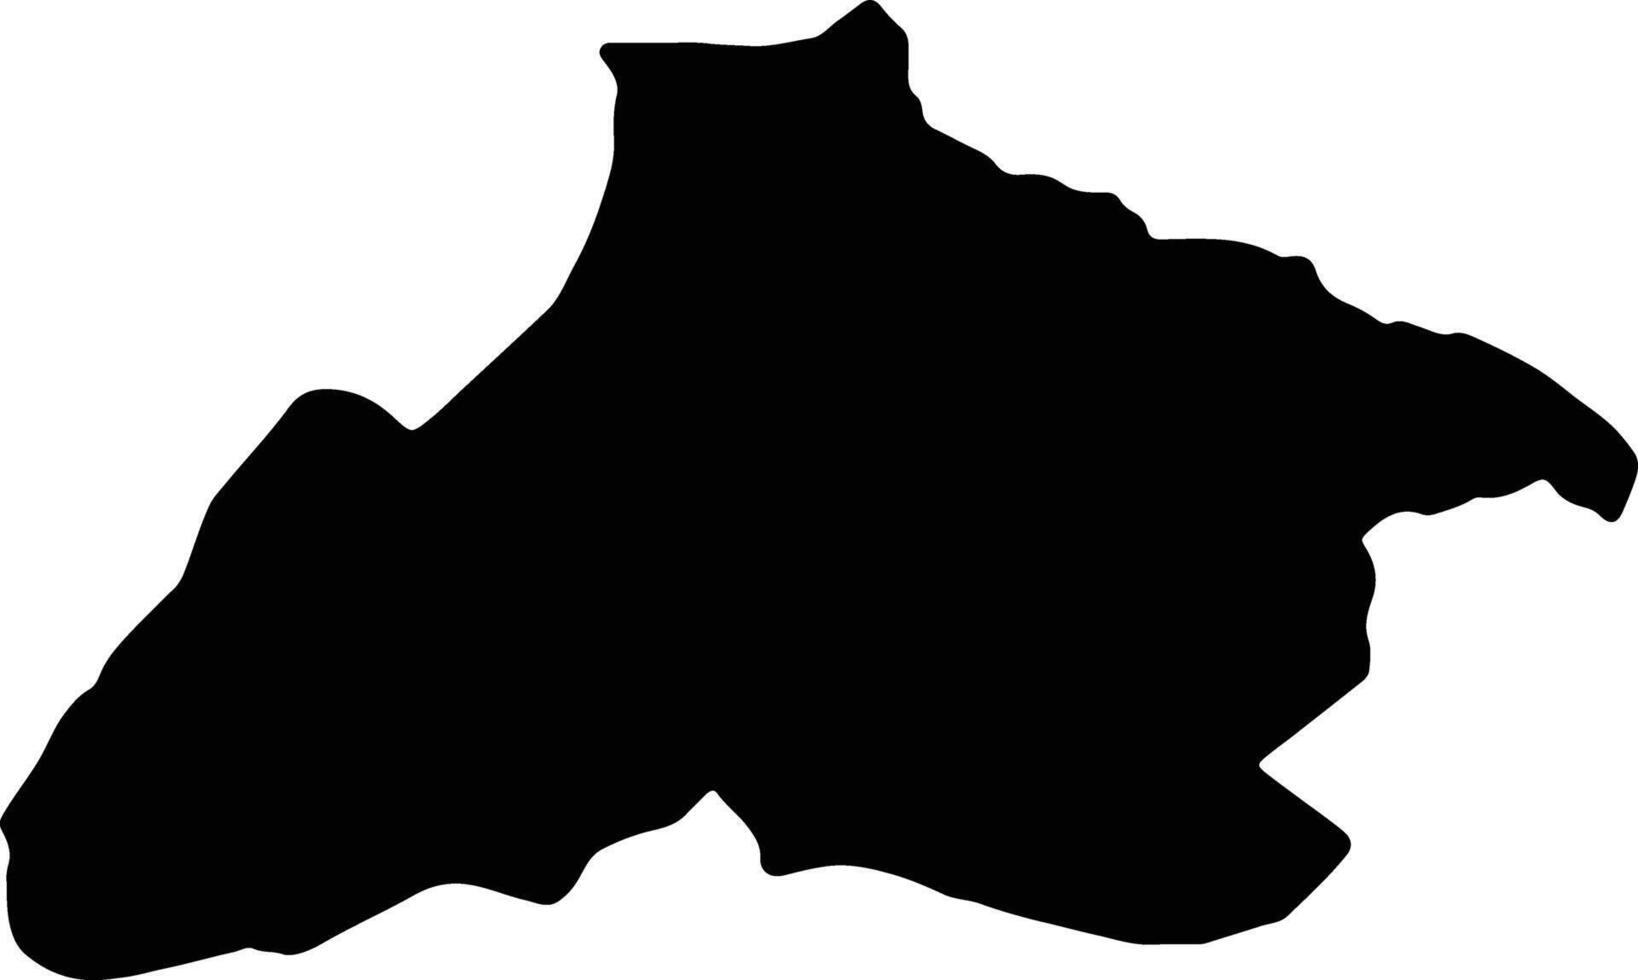 Tandjile Chad silhouette map vector